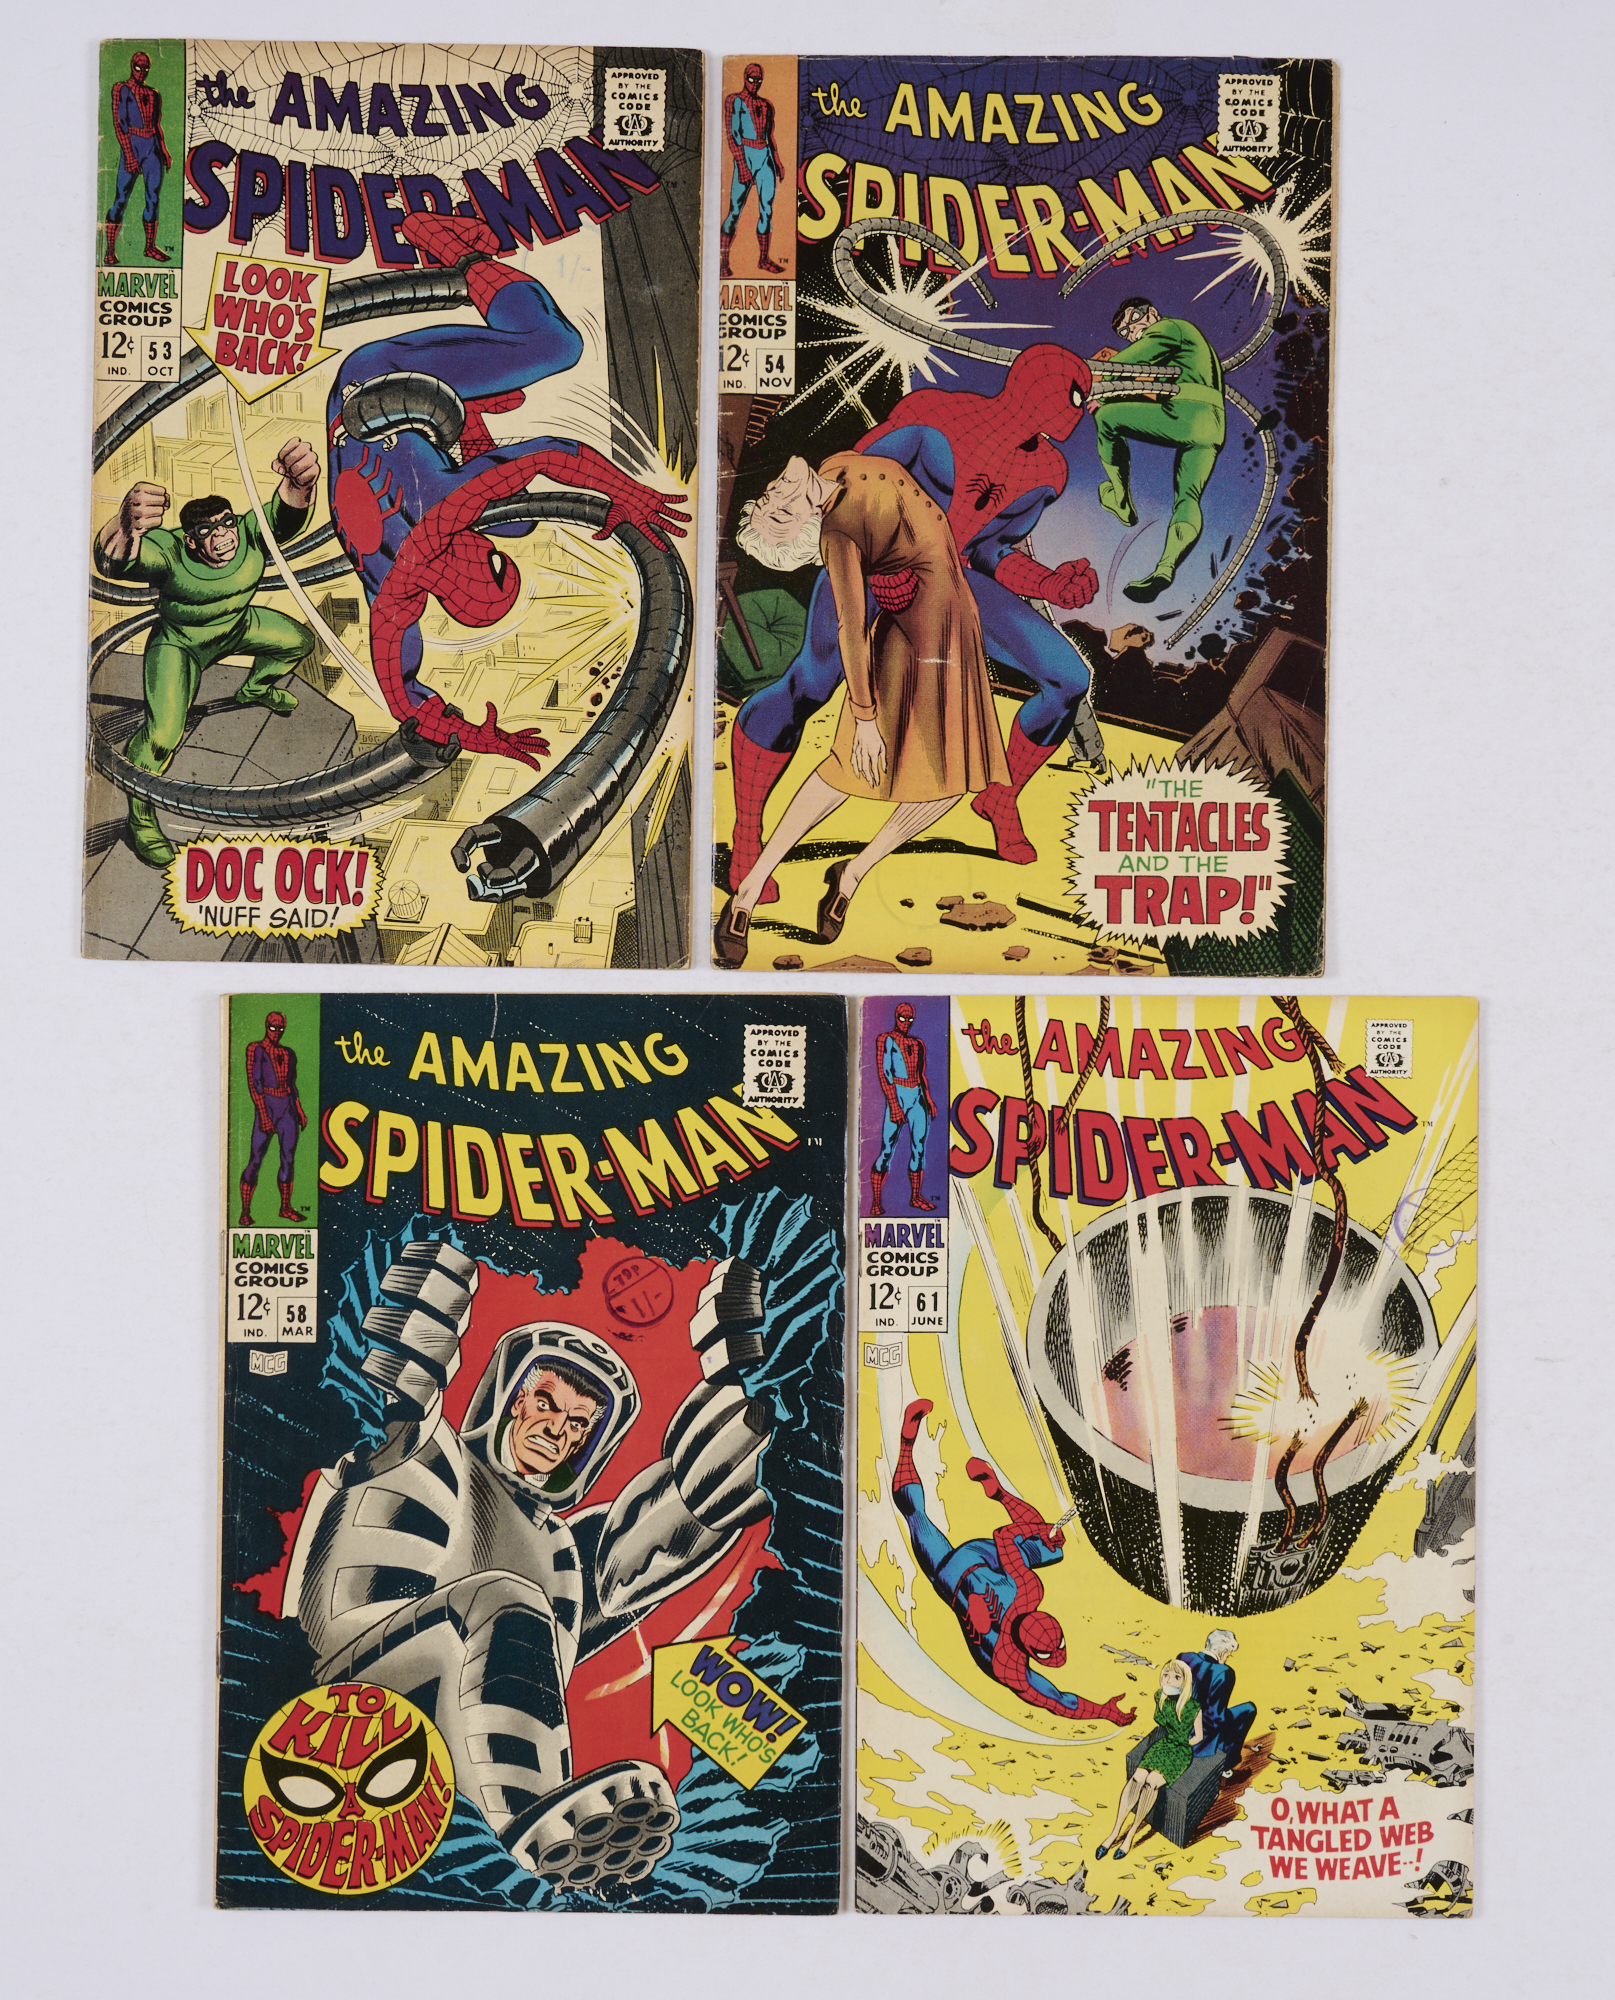 Amazing Spider-Man (1967-68) 53, 54, 58, 61 [vg/fn] (4). No Reserve